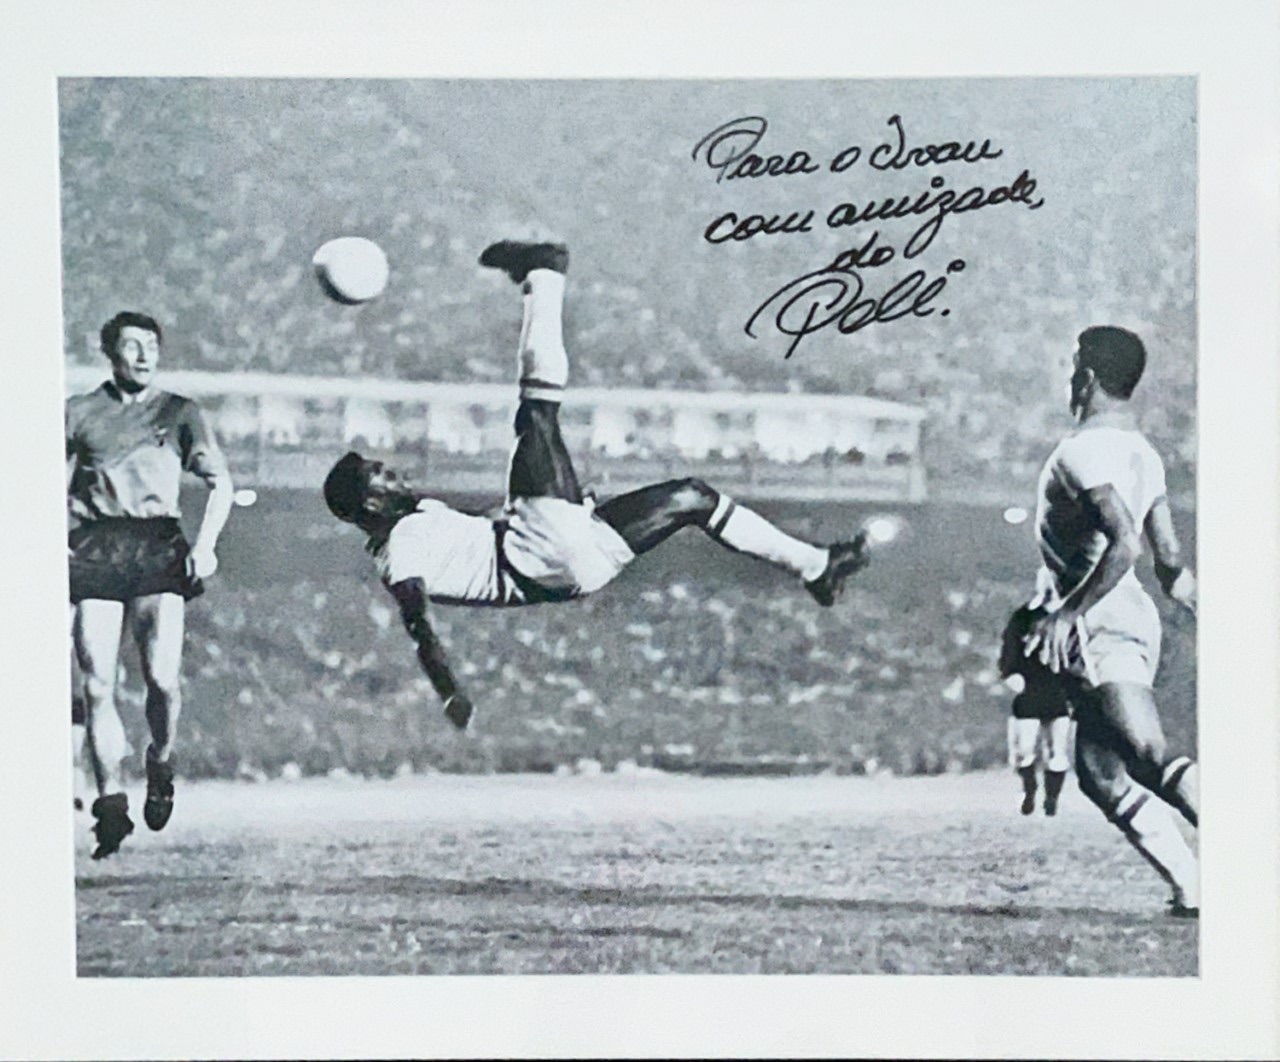 Signed picture of Pele's famous back flip kick goal